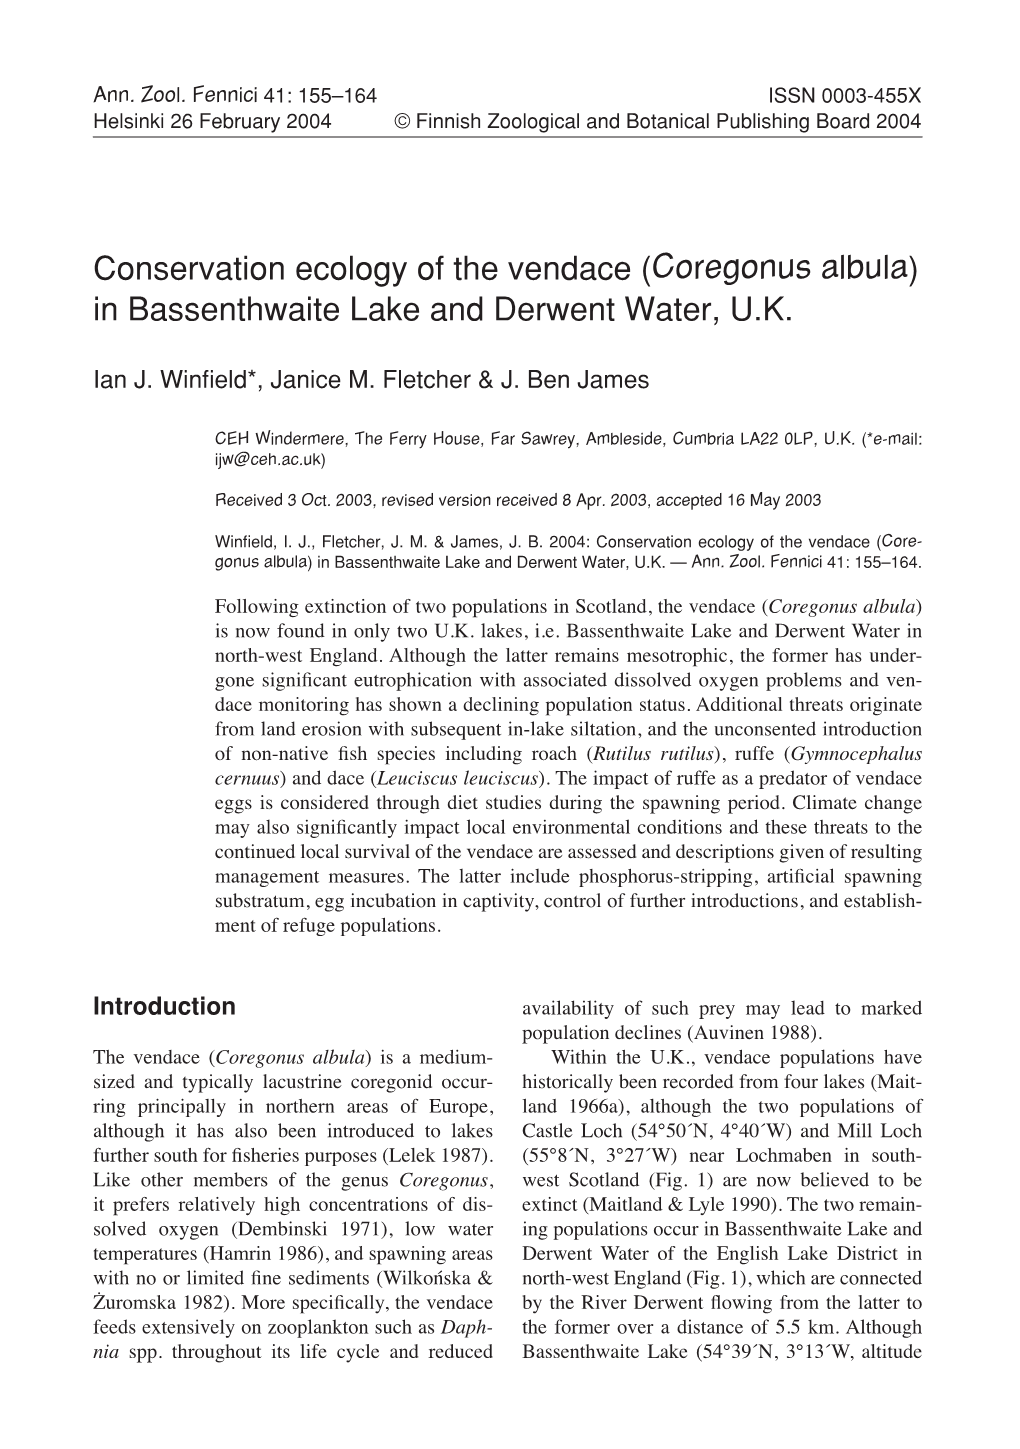 Conservation Ecology of the Vendace (Coregonus Albula) in Bassenthwaite Lake and Derwent Water, U.K